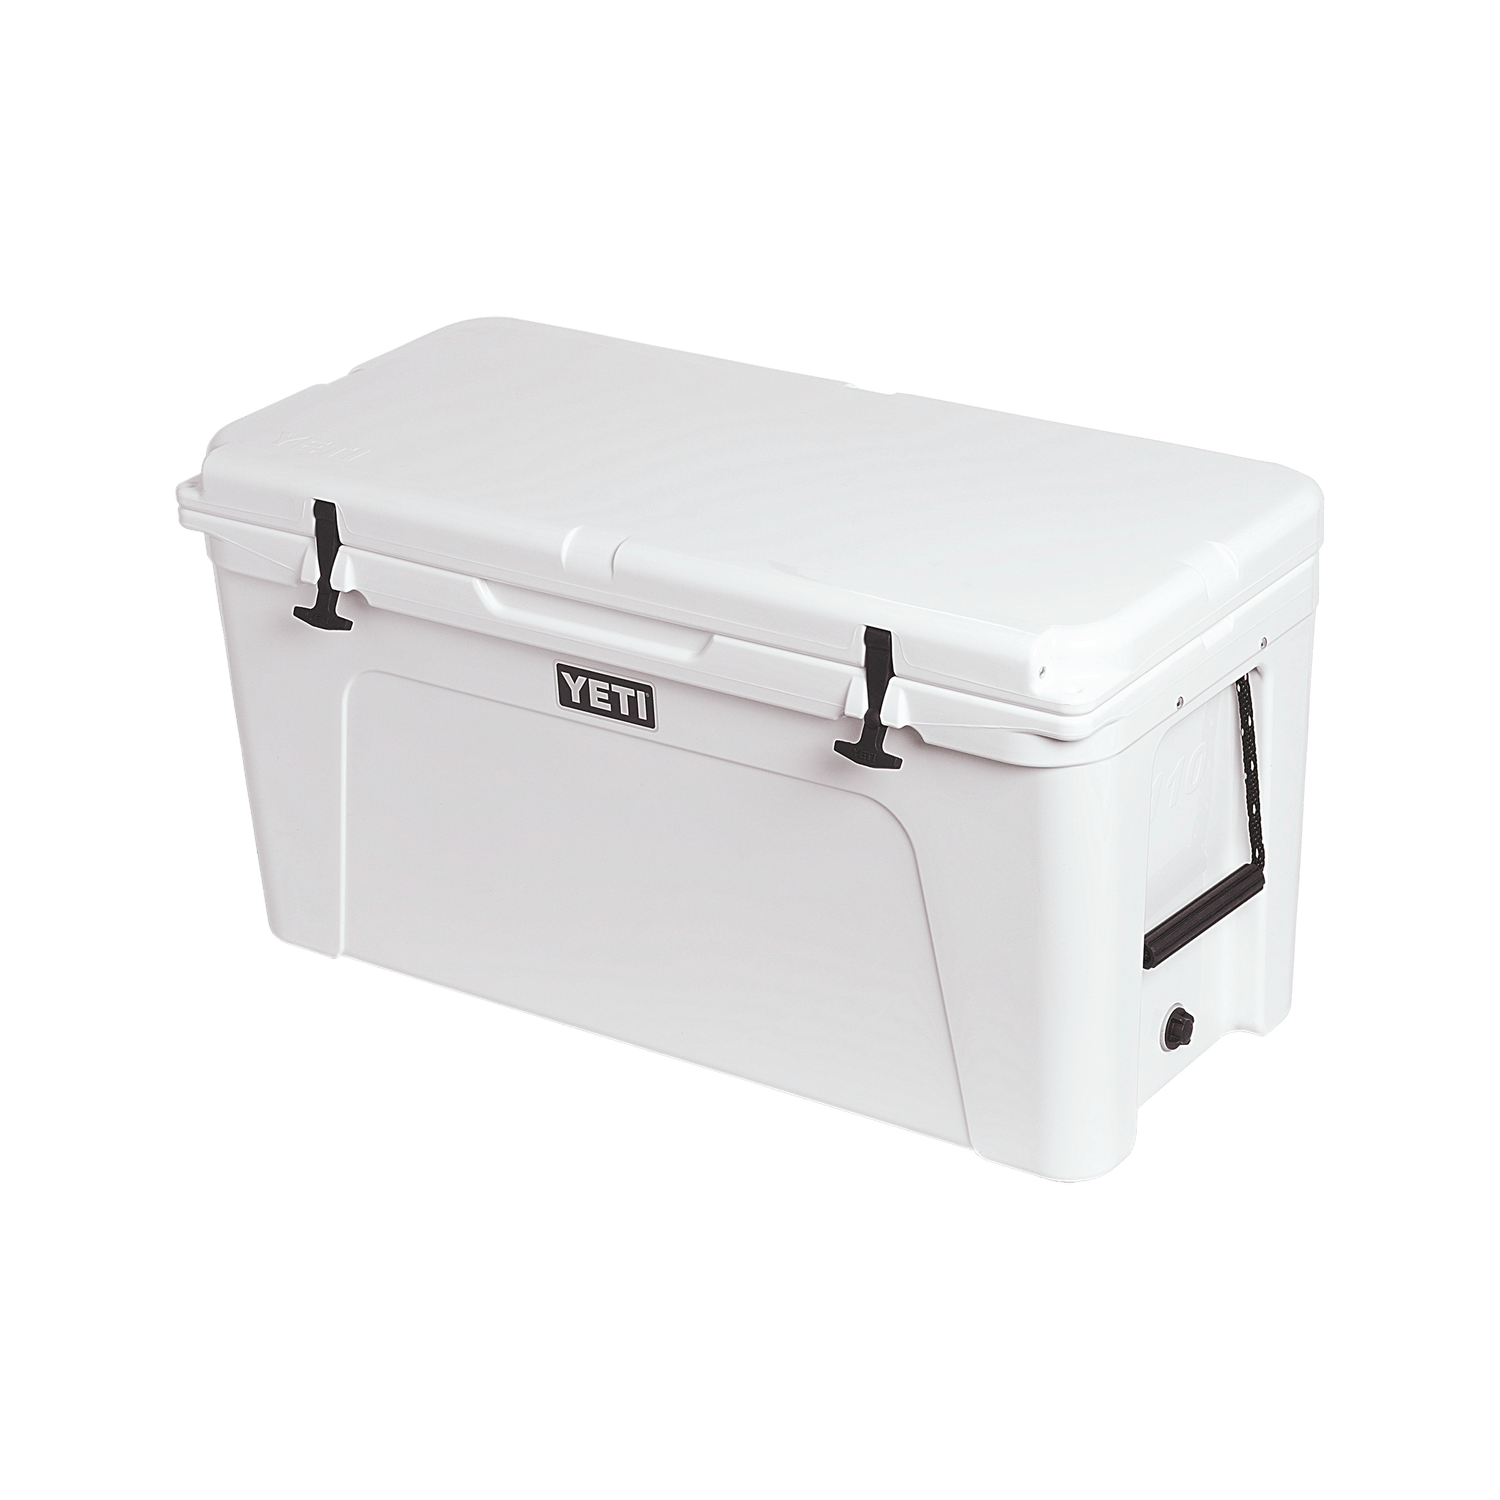 YETI Tundra® 110 Cool Box White